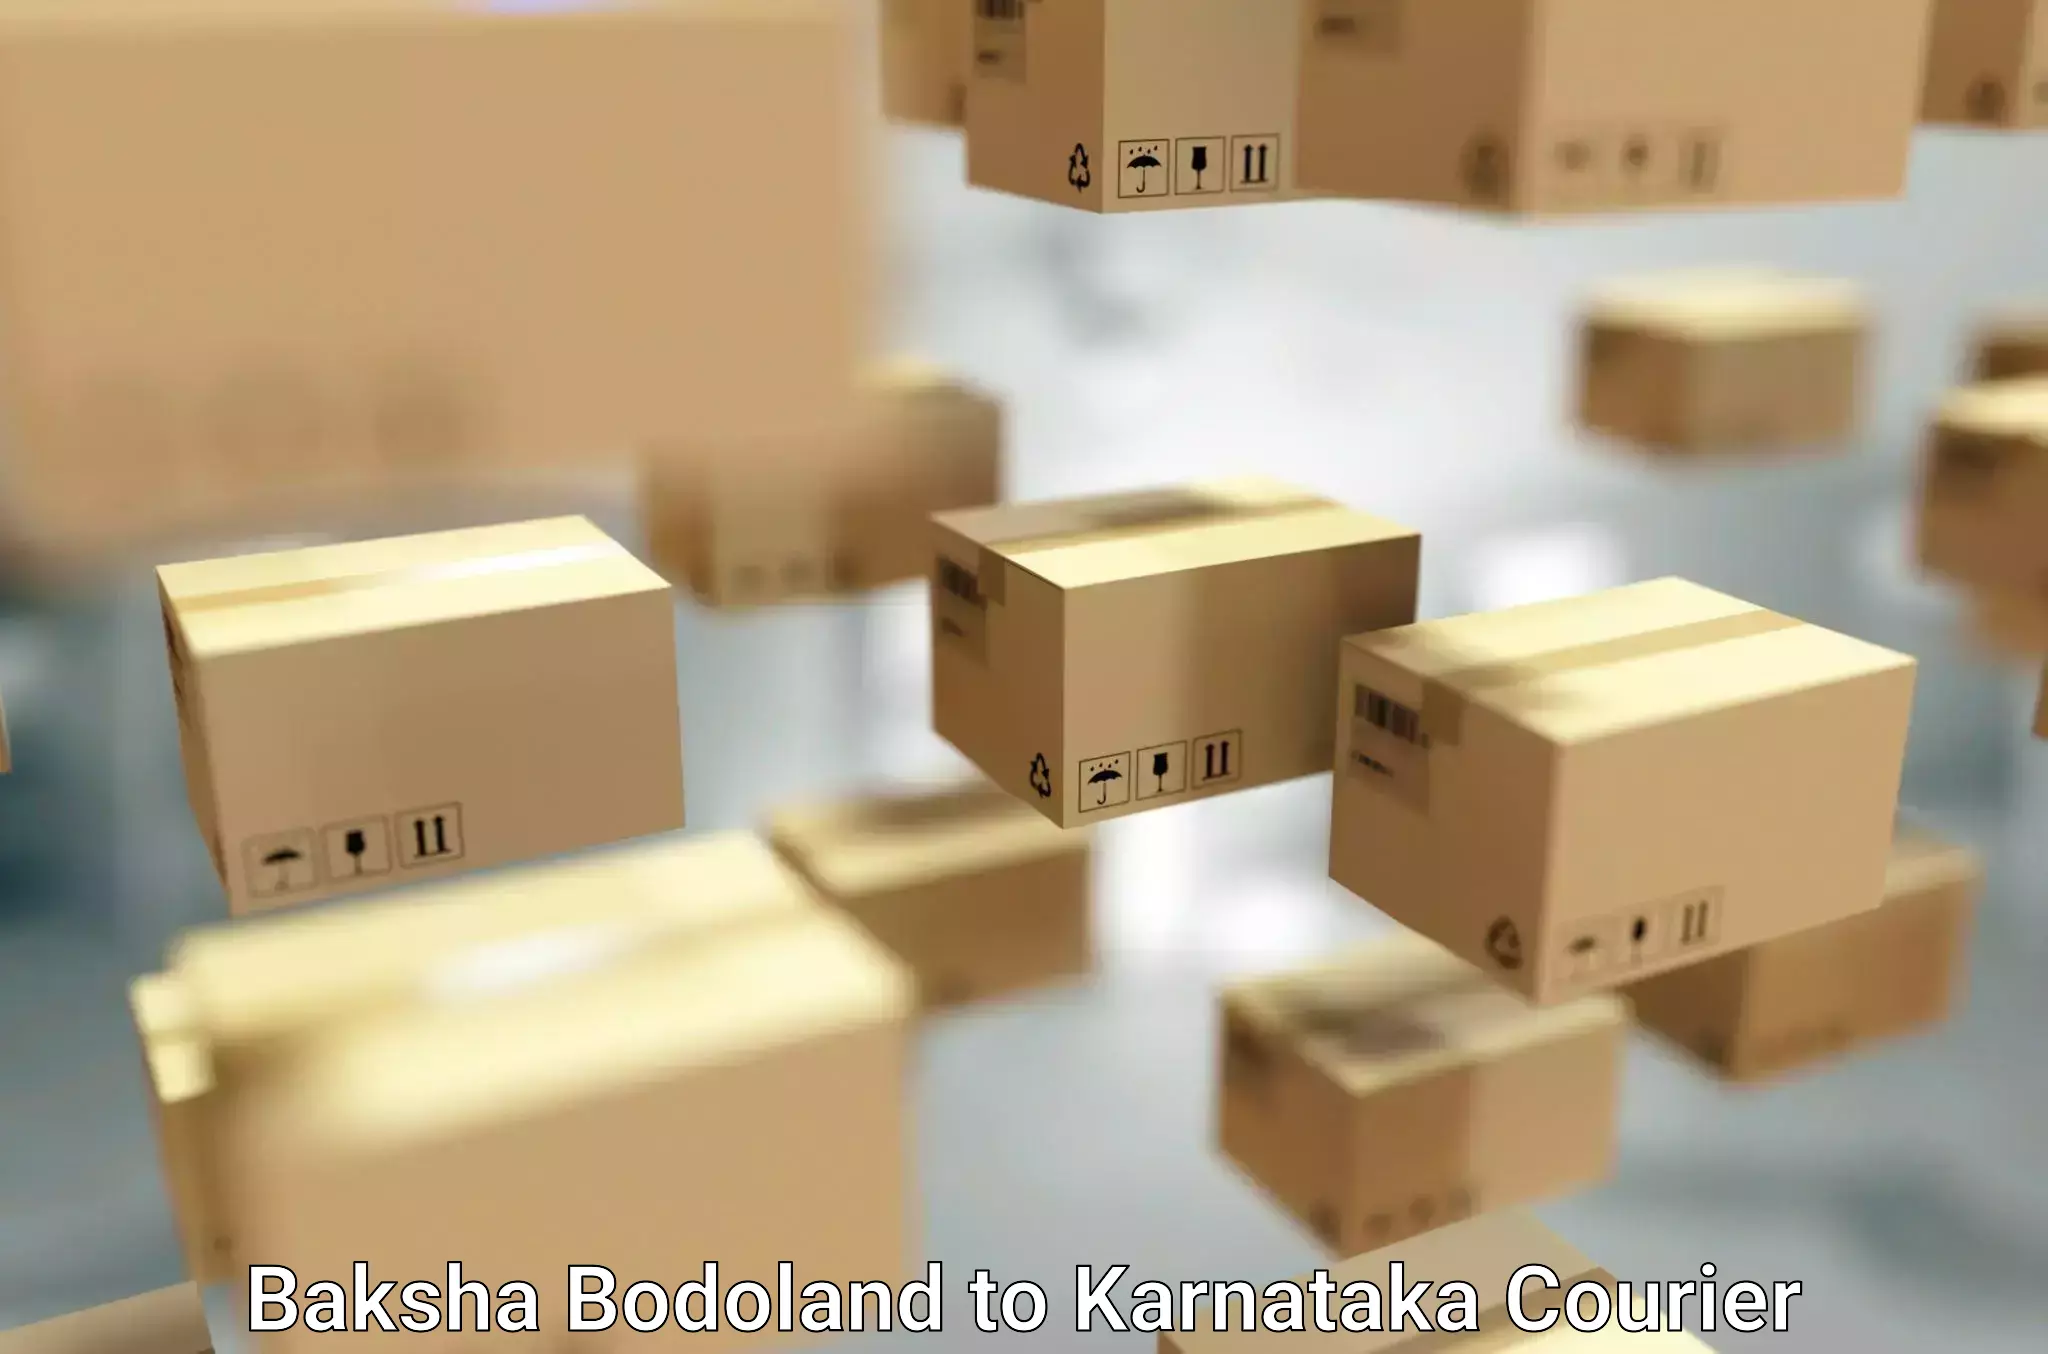 Efficient moving company Baksha Bodoland to Doddaballapura